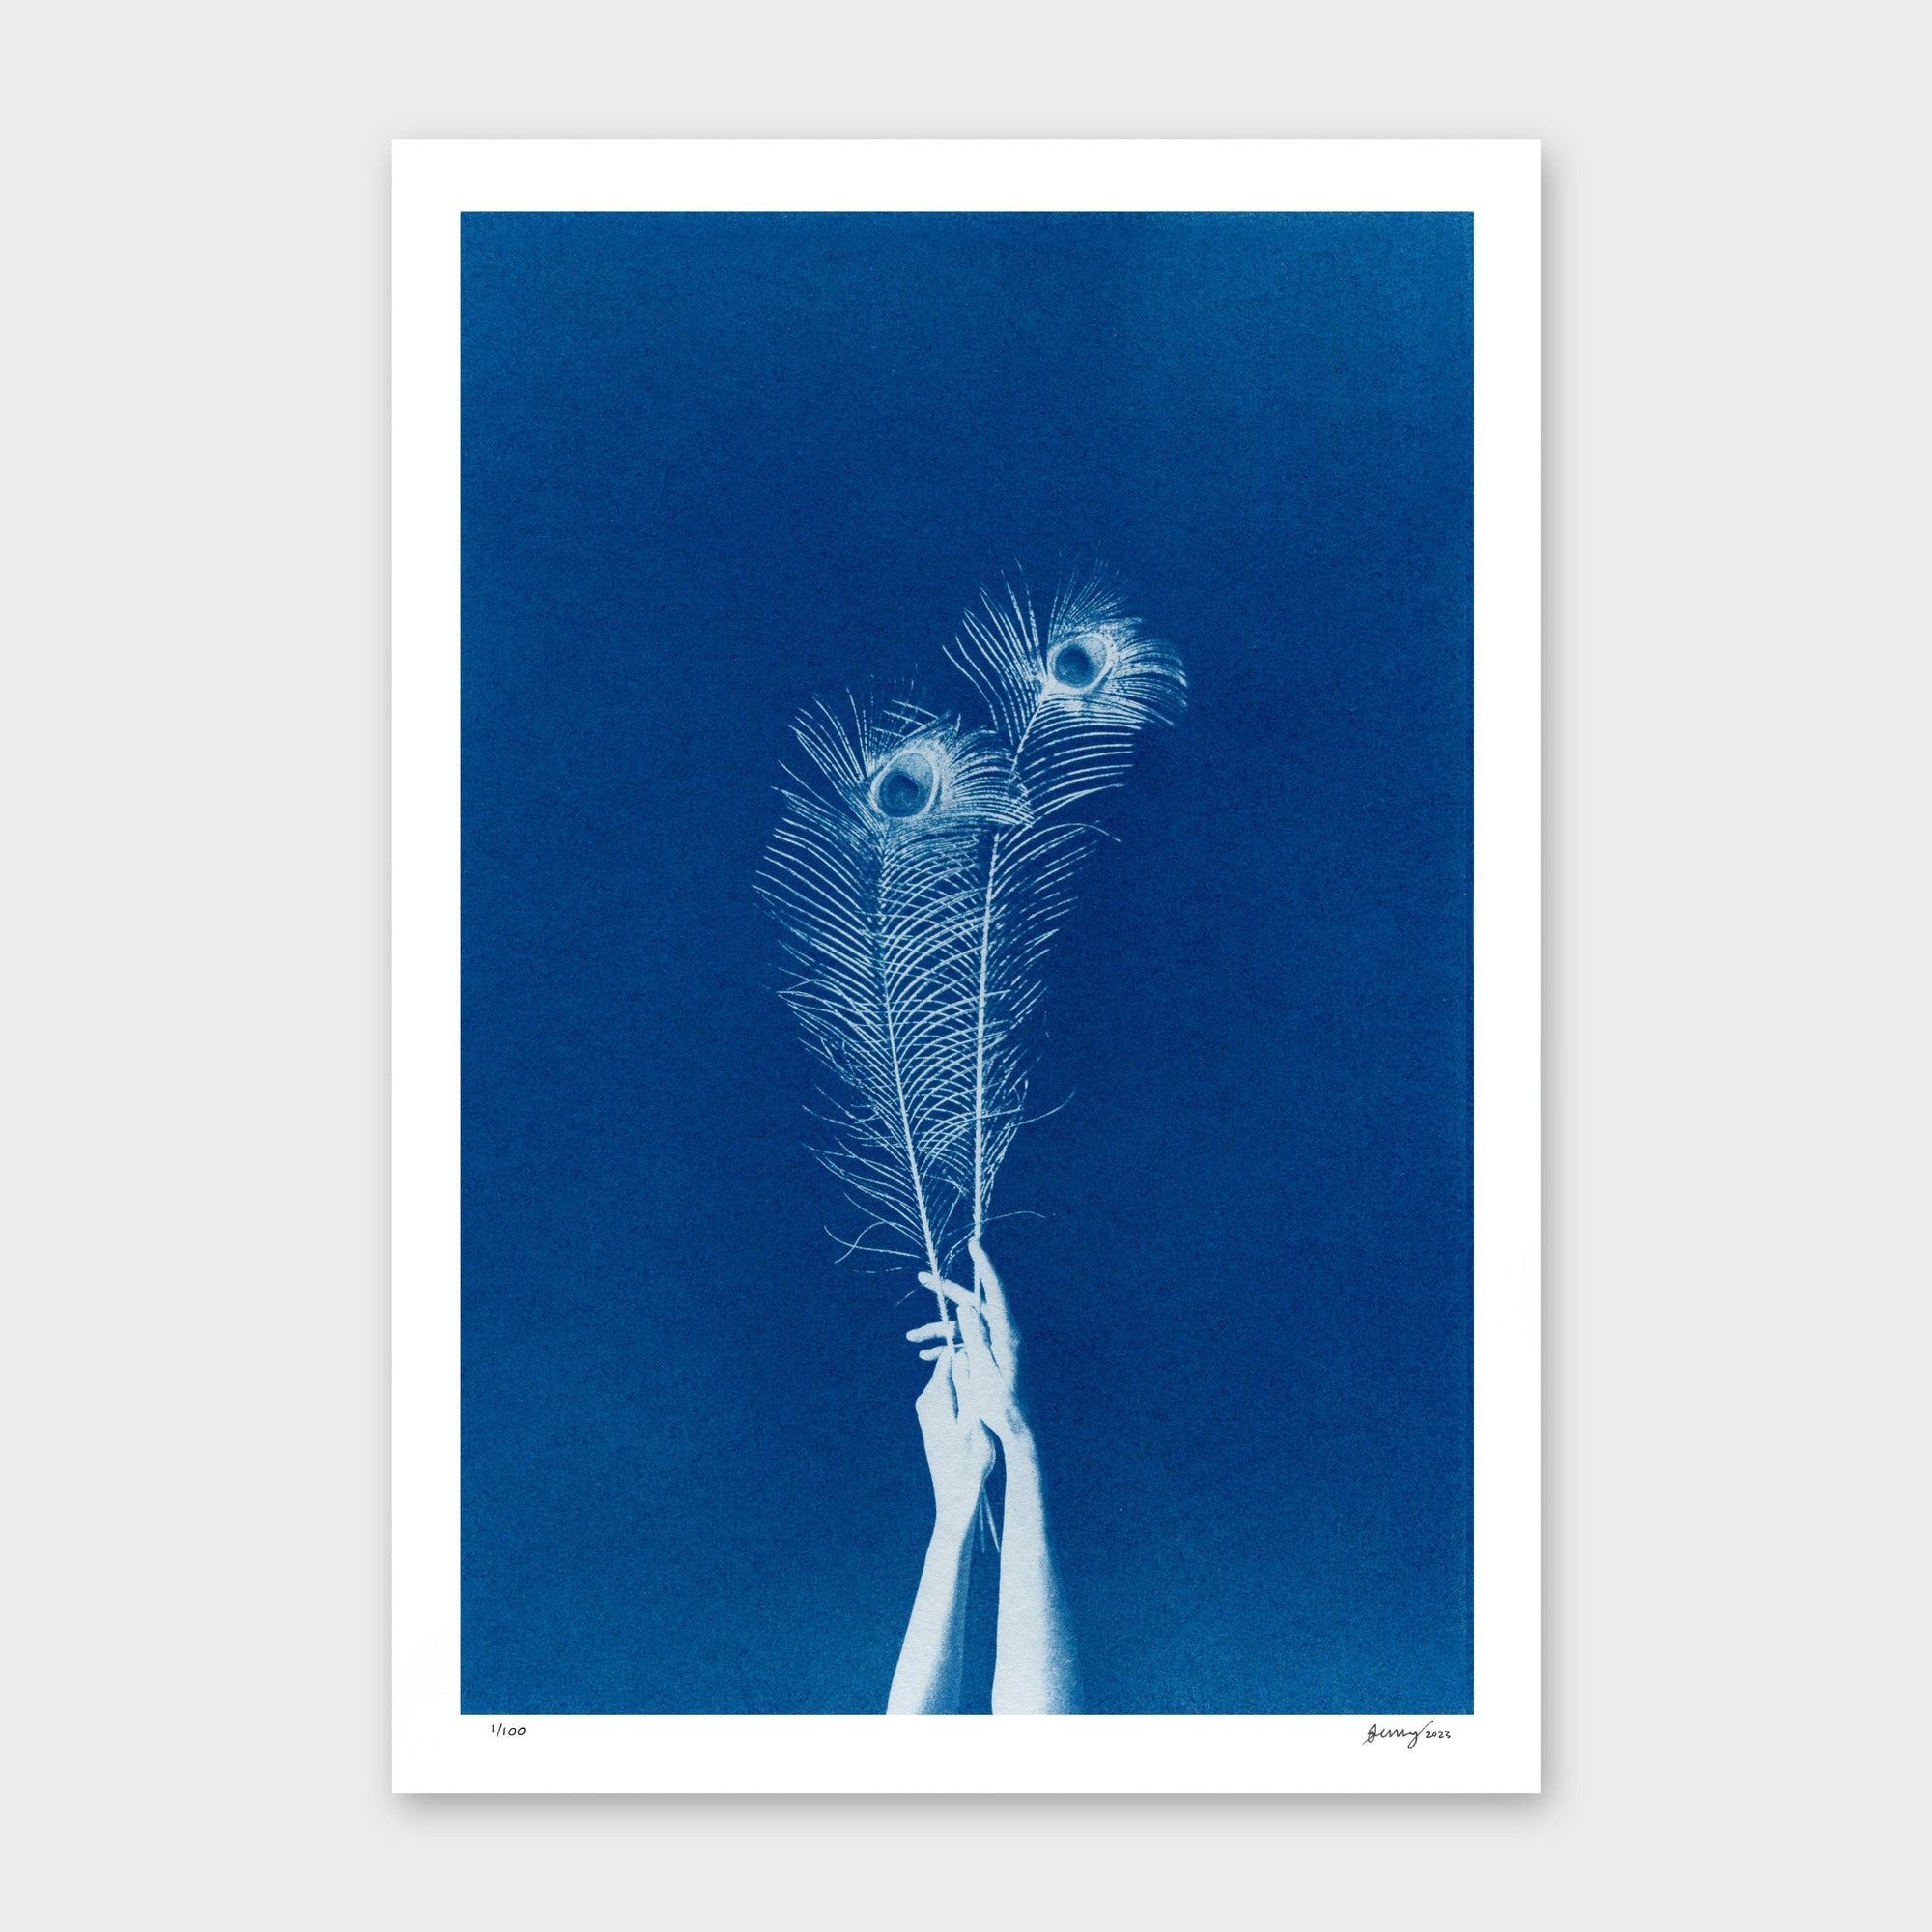 Chiaroscuro Feathers 02 Limited Edition Cyanotype by Sophia Jenny